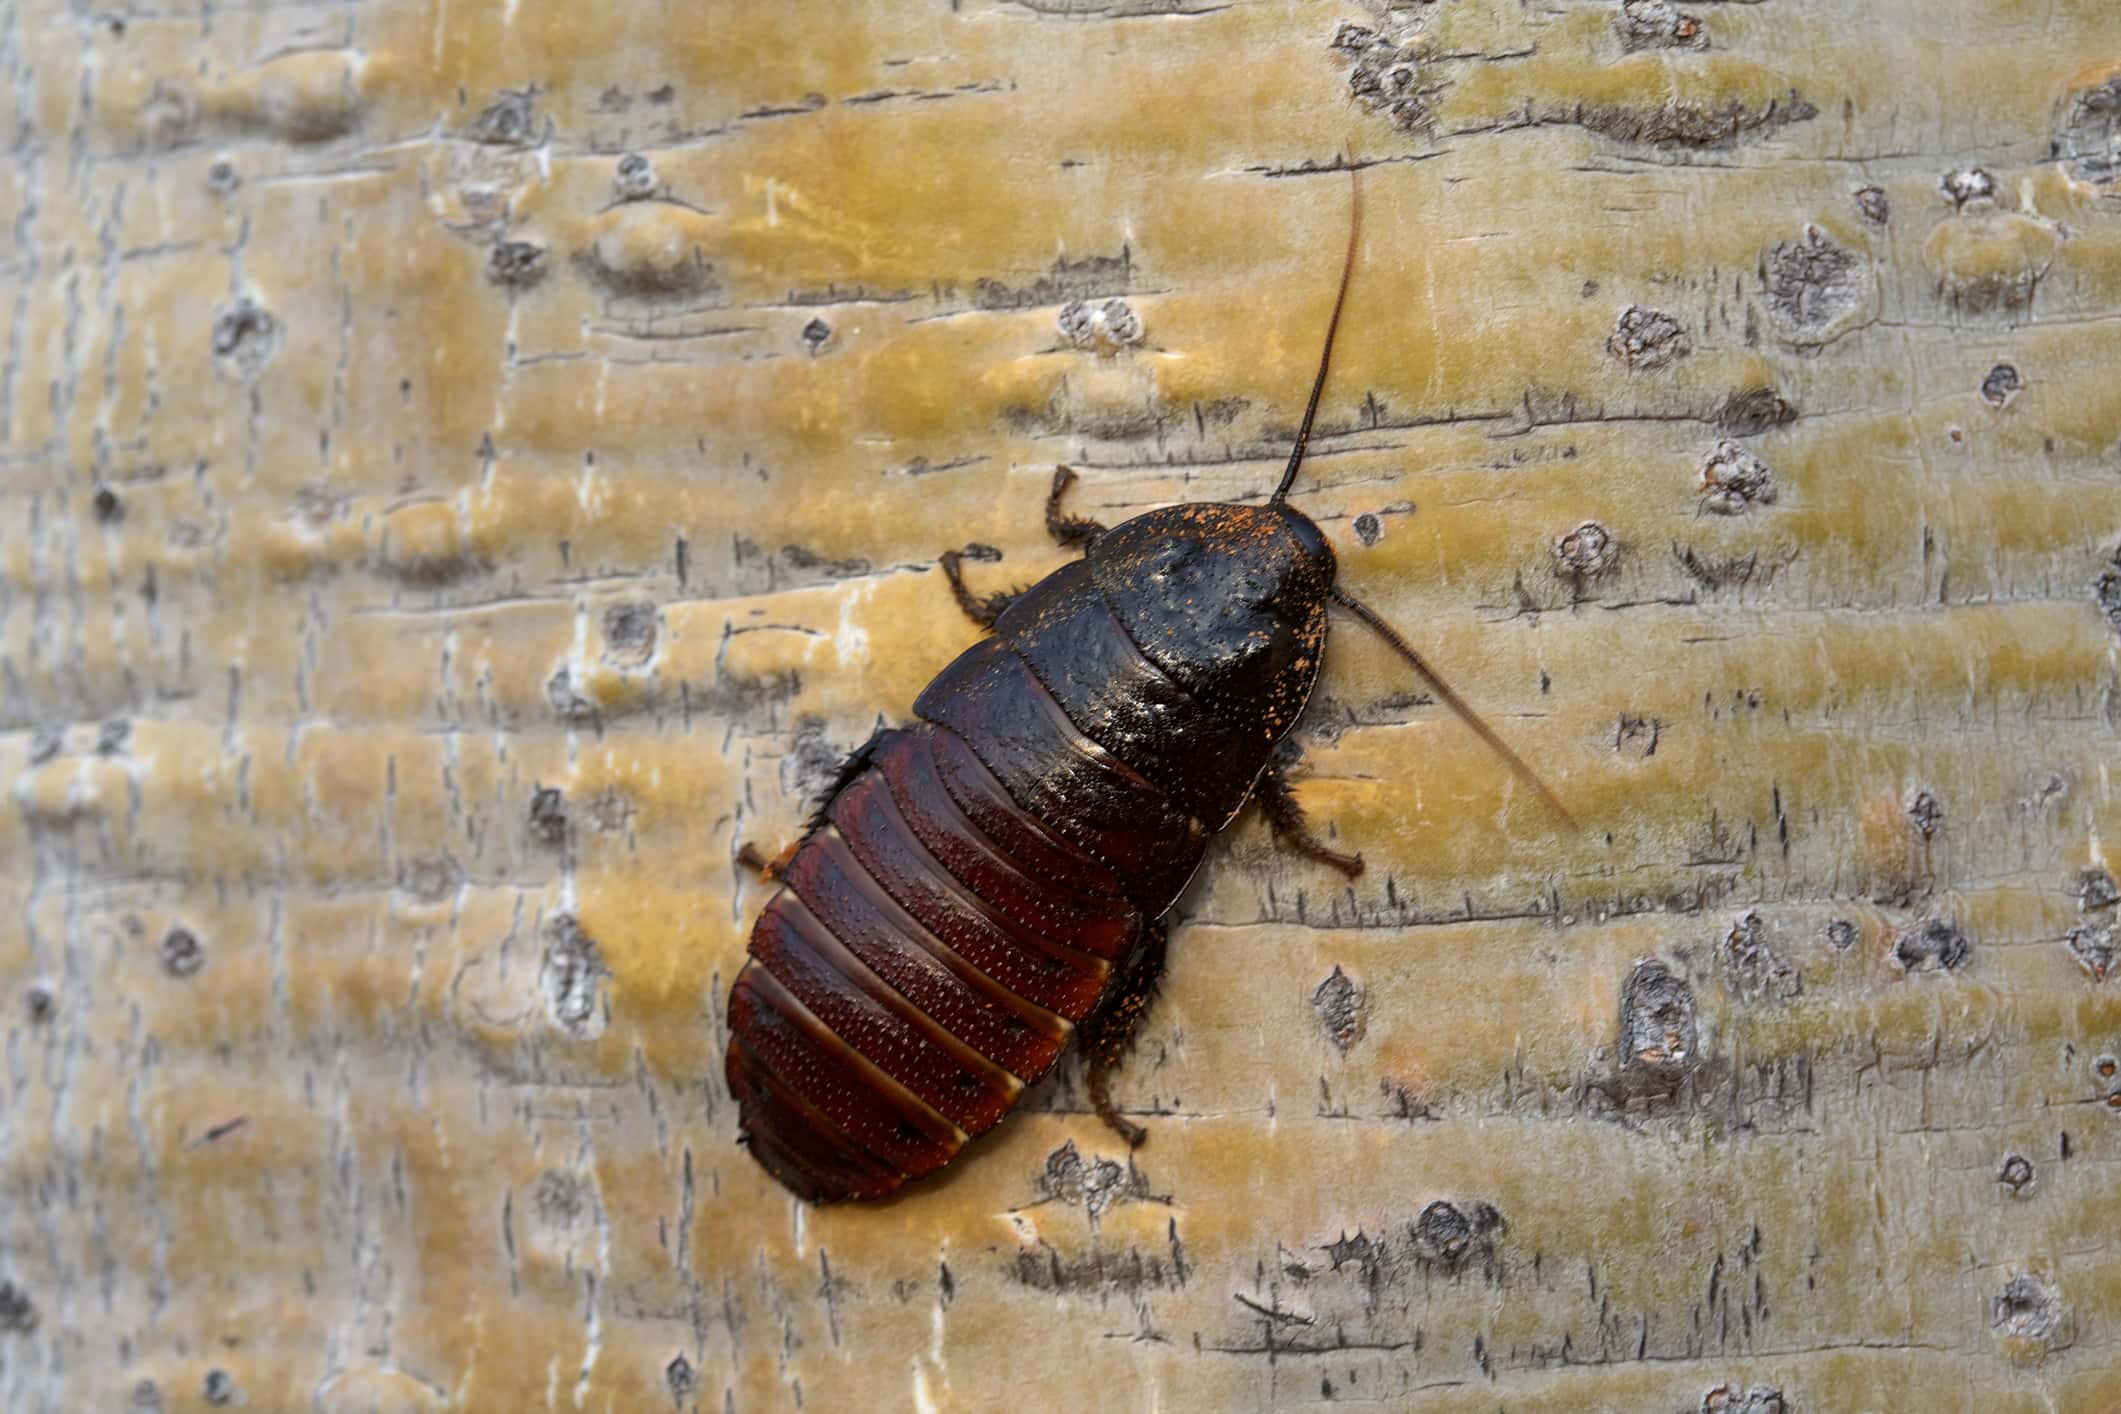 Hissing cockroach on Baobab trunk.